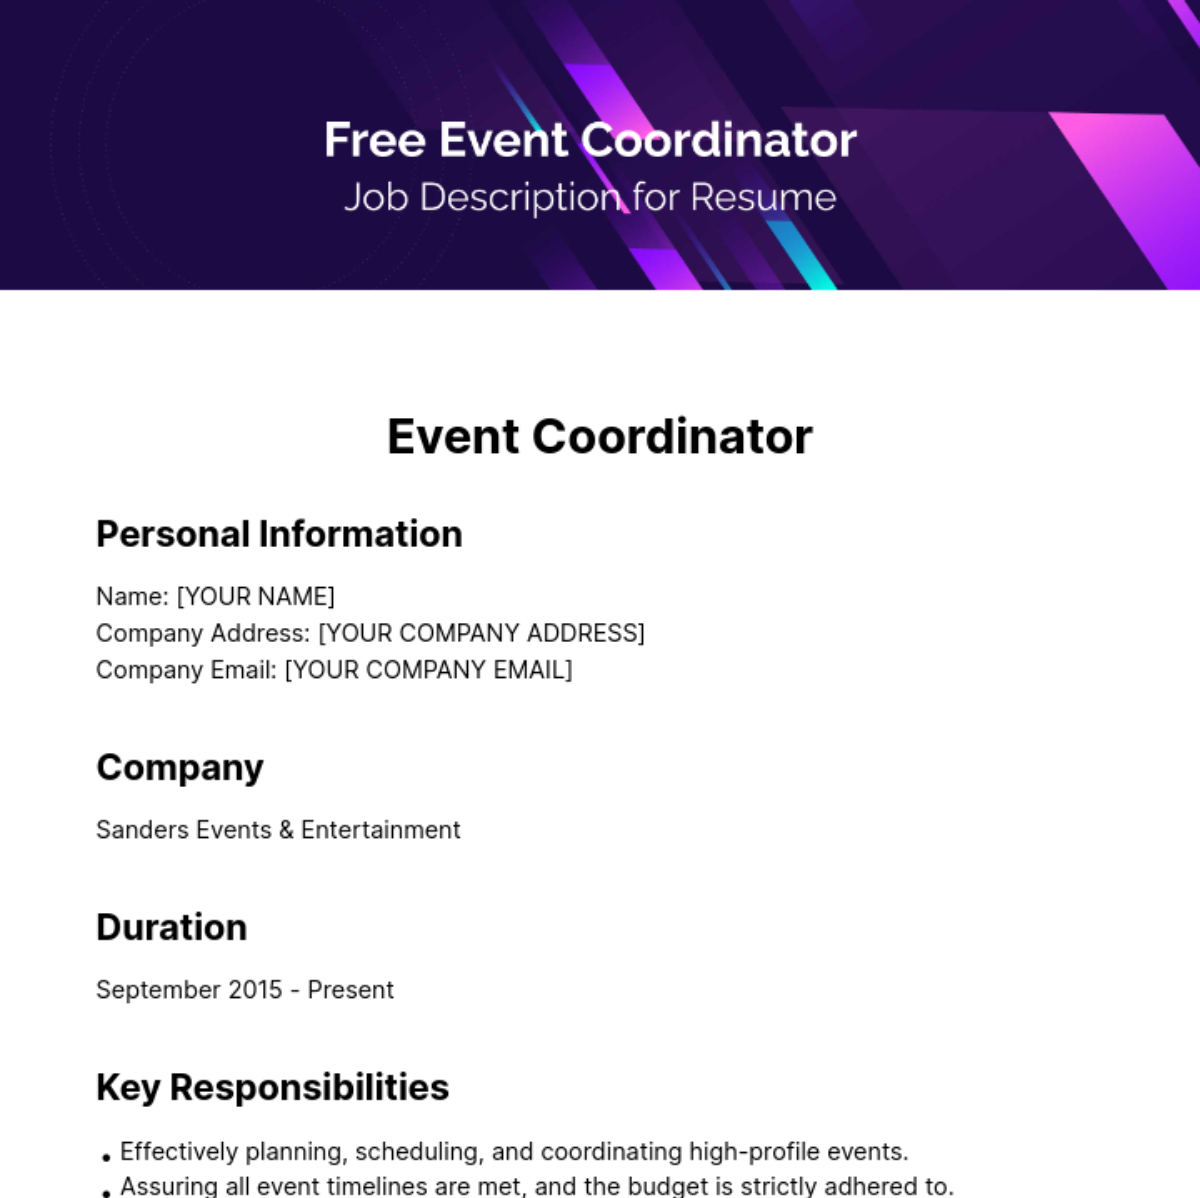 Event Coordinator Job Description for Resume Template